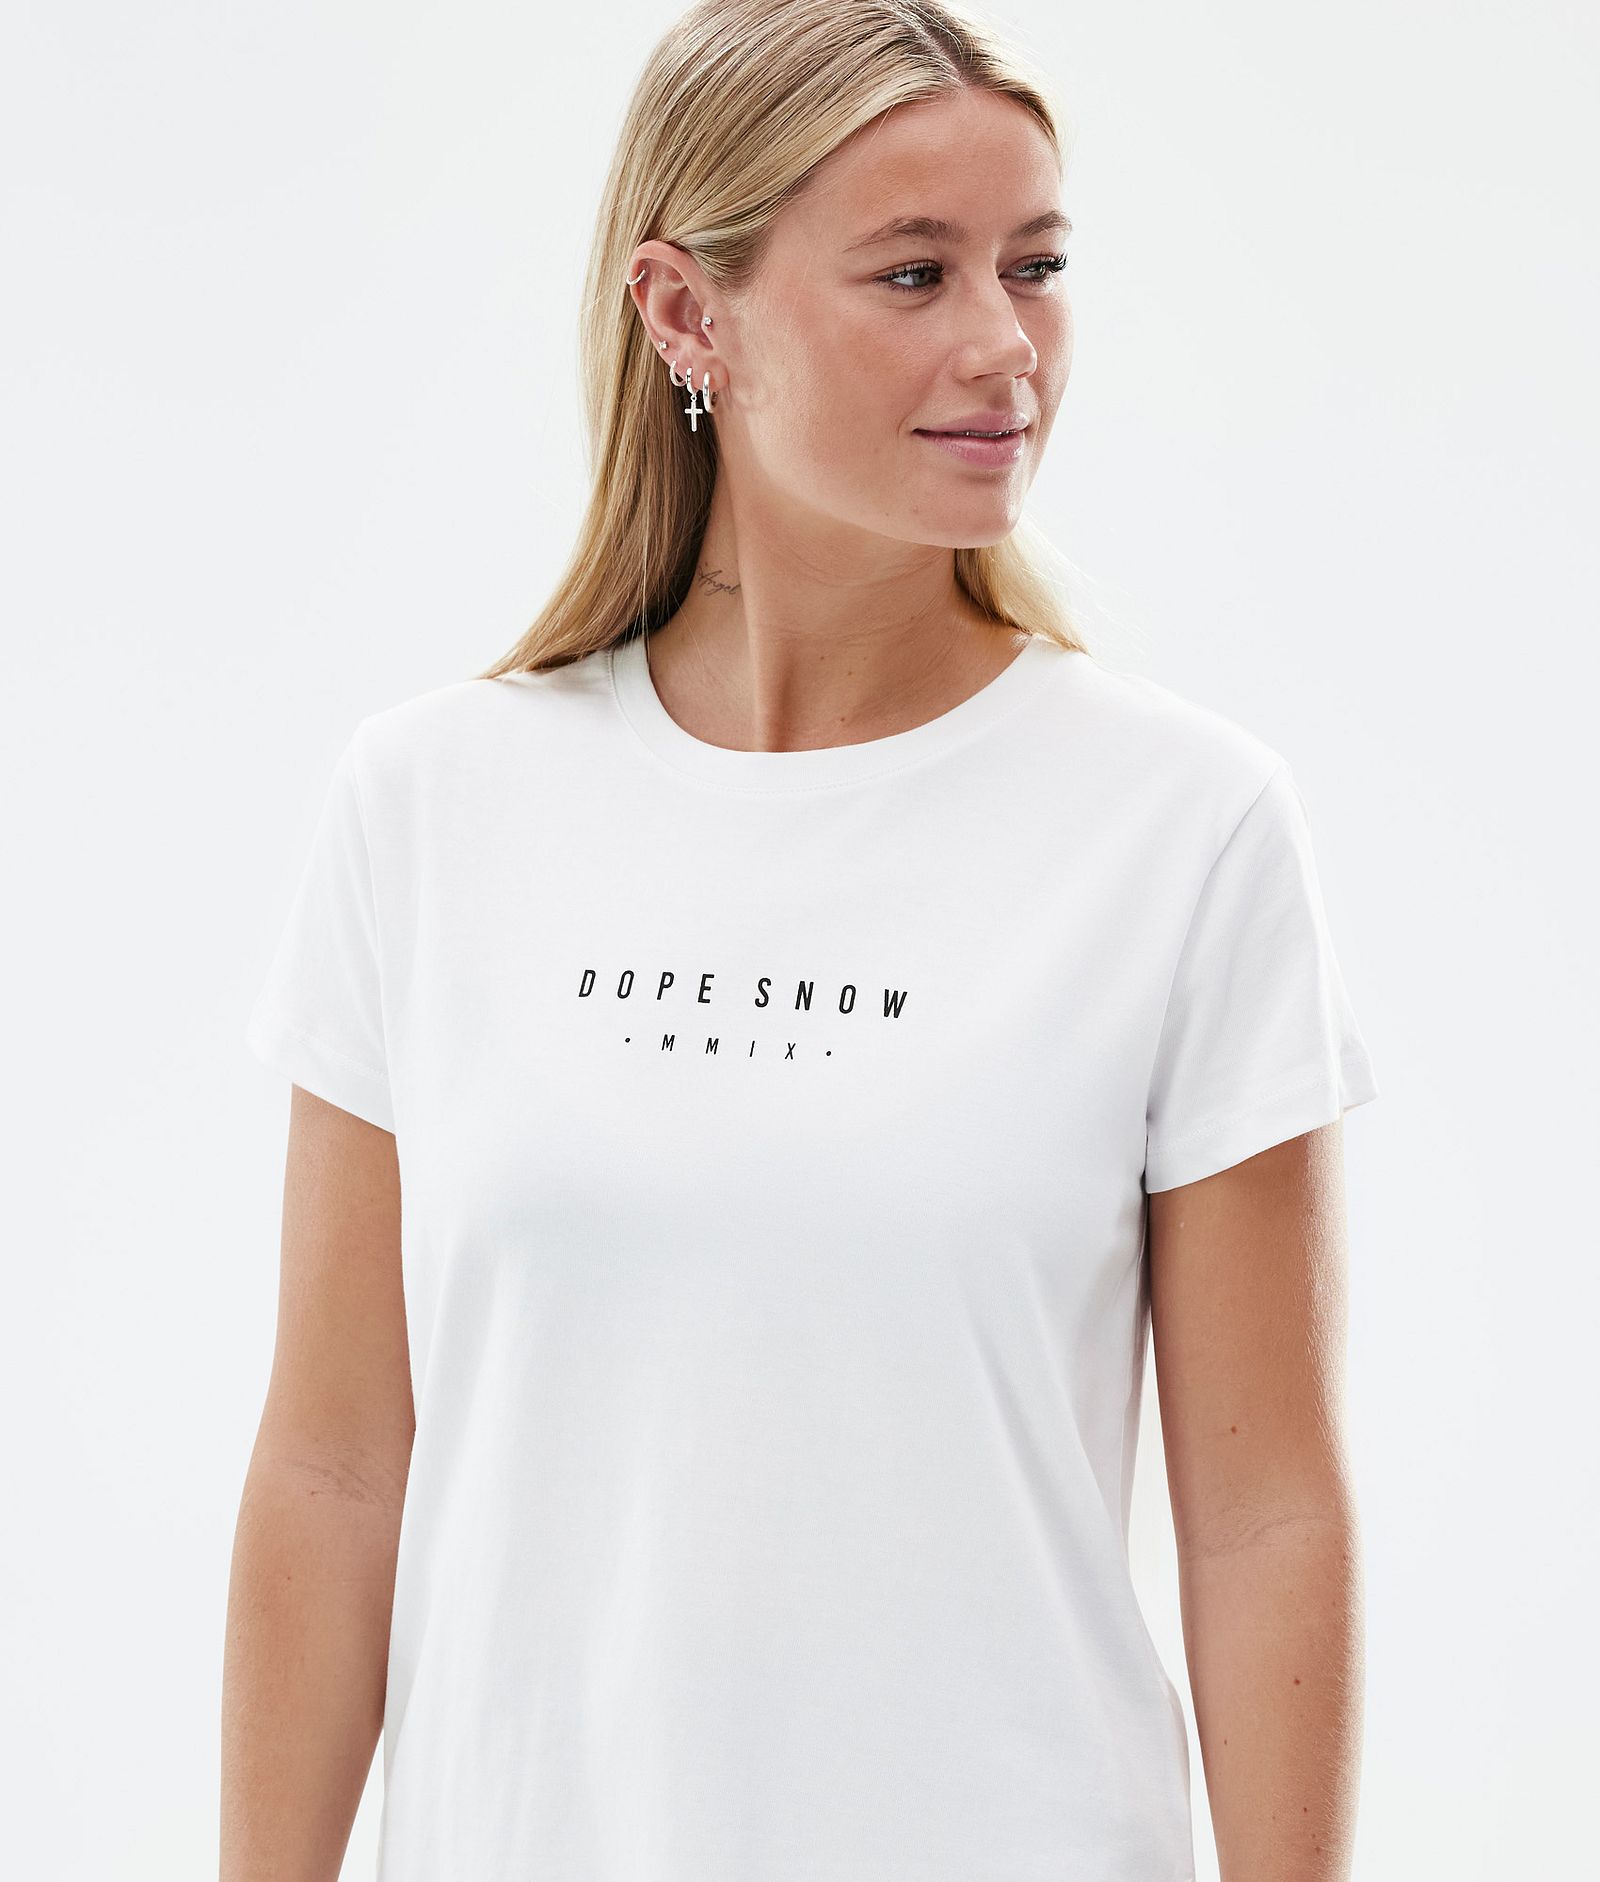 Standard W Camiseta Mujer Silhouette White